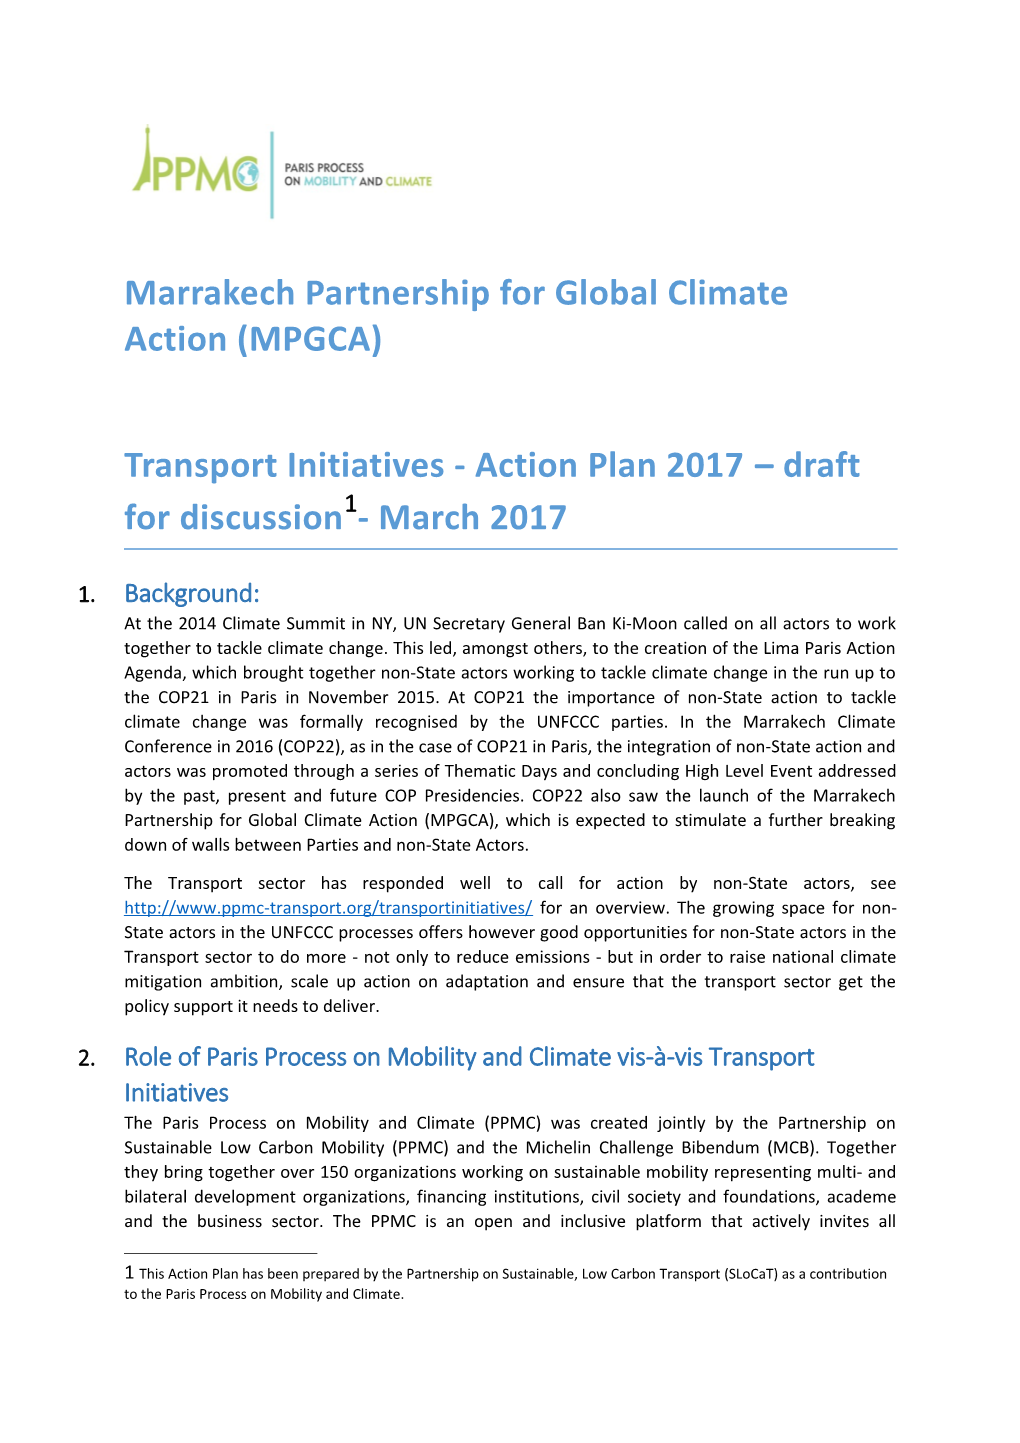 2.Role of Paris Process on Mobility and Climate Vis-À-Vis Transport Initiatives